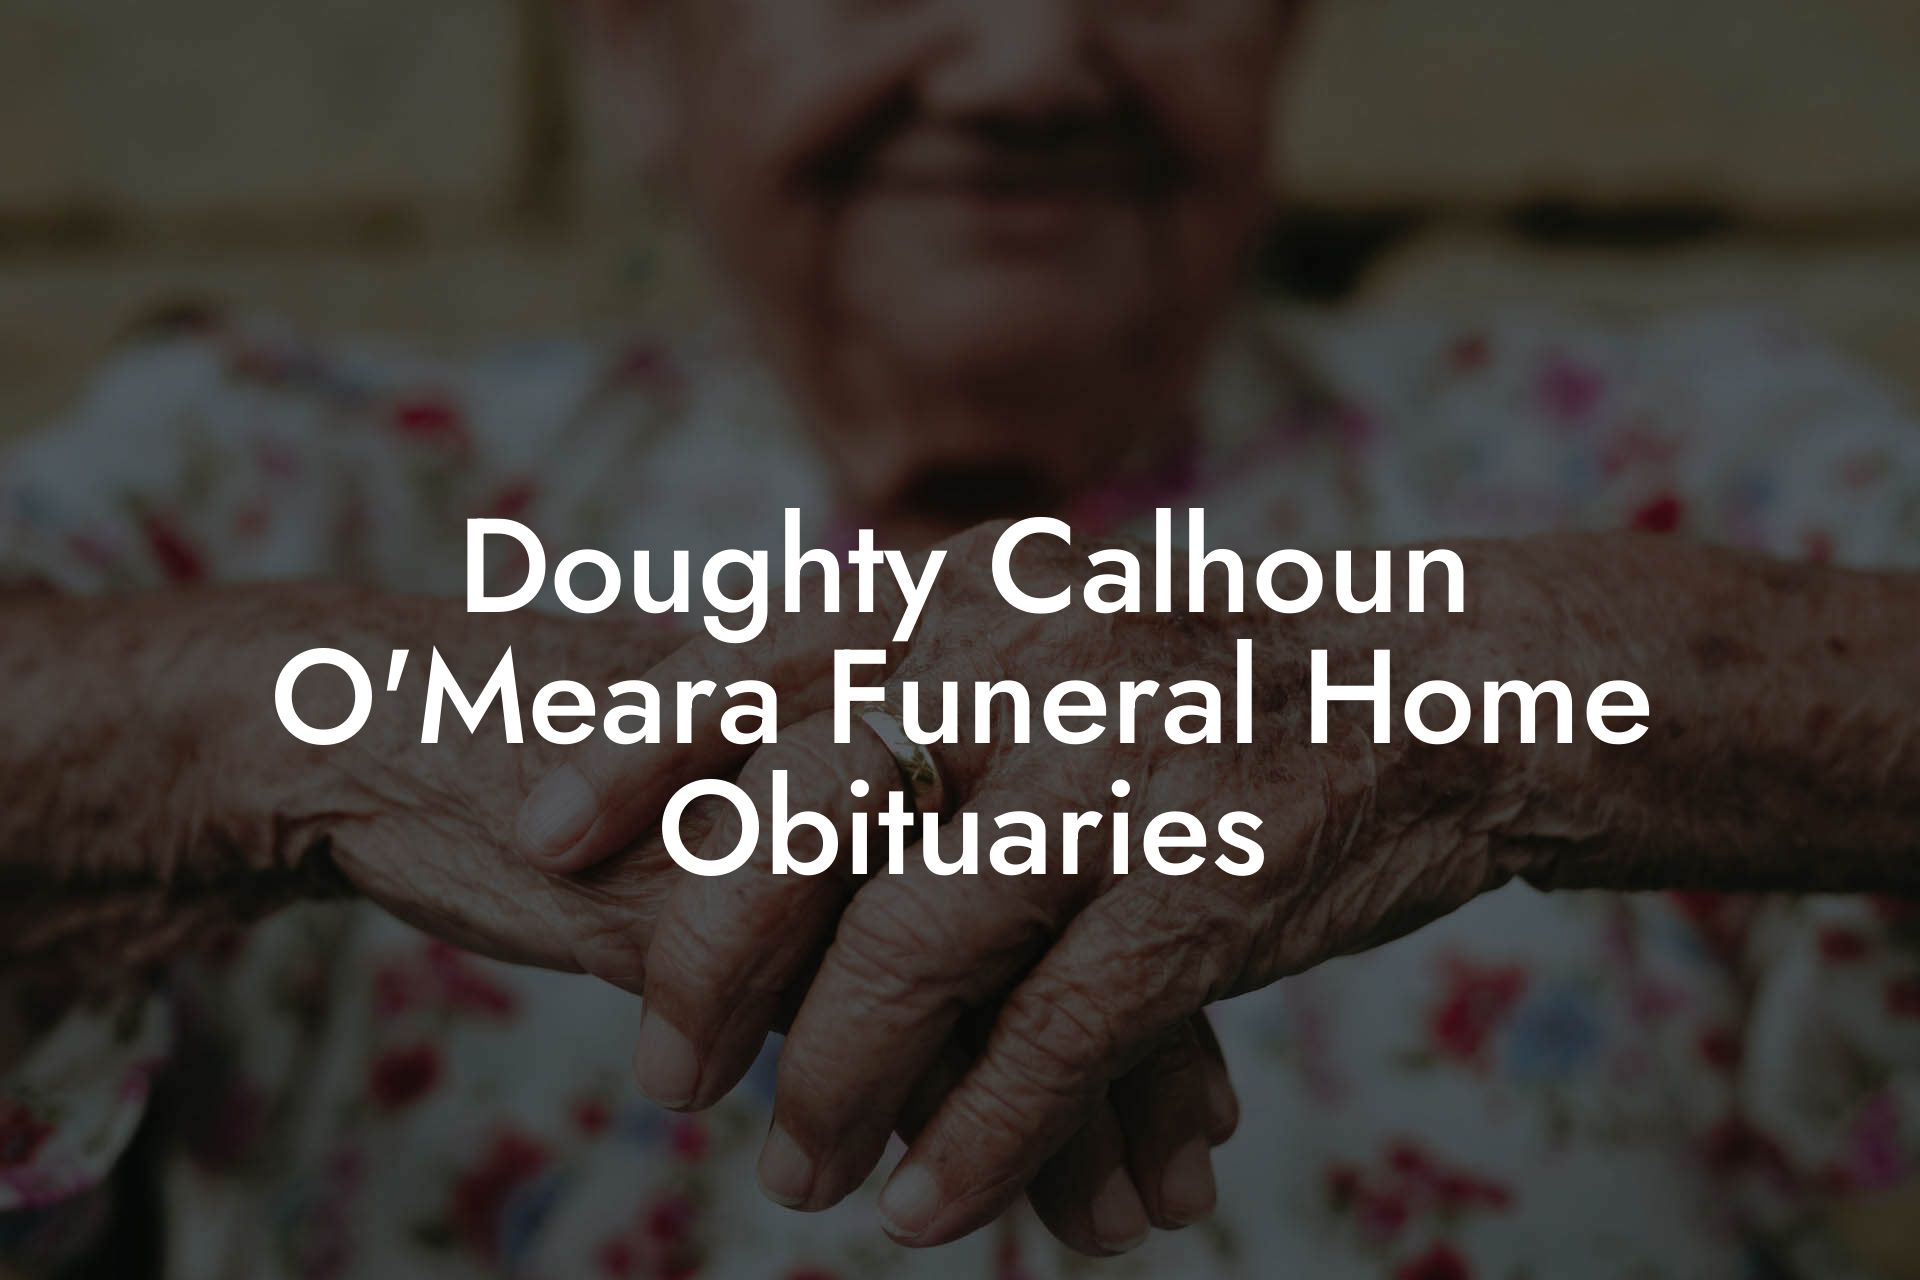 Doughty Calhoun O'Meara Funeral Home Obituaries